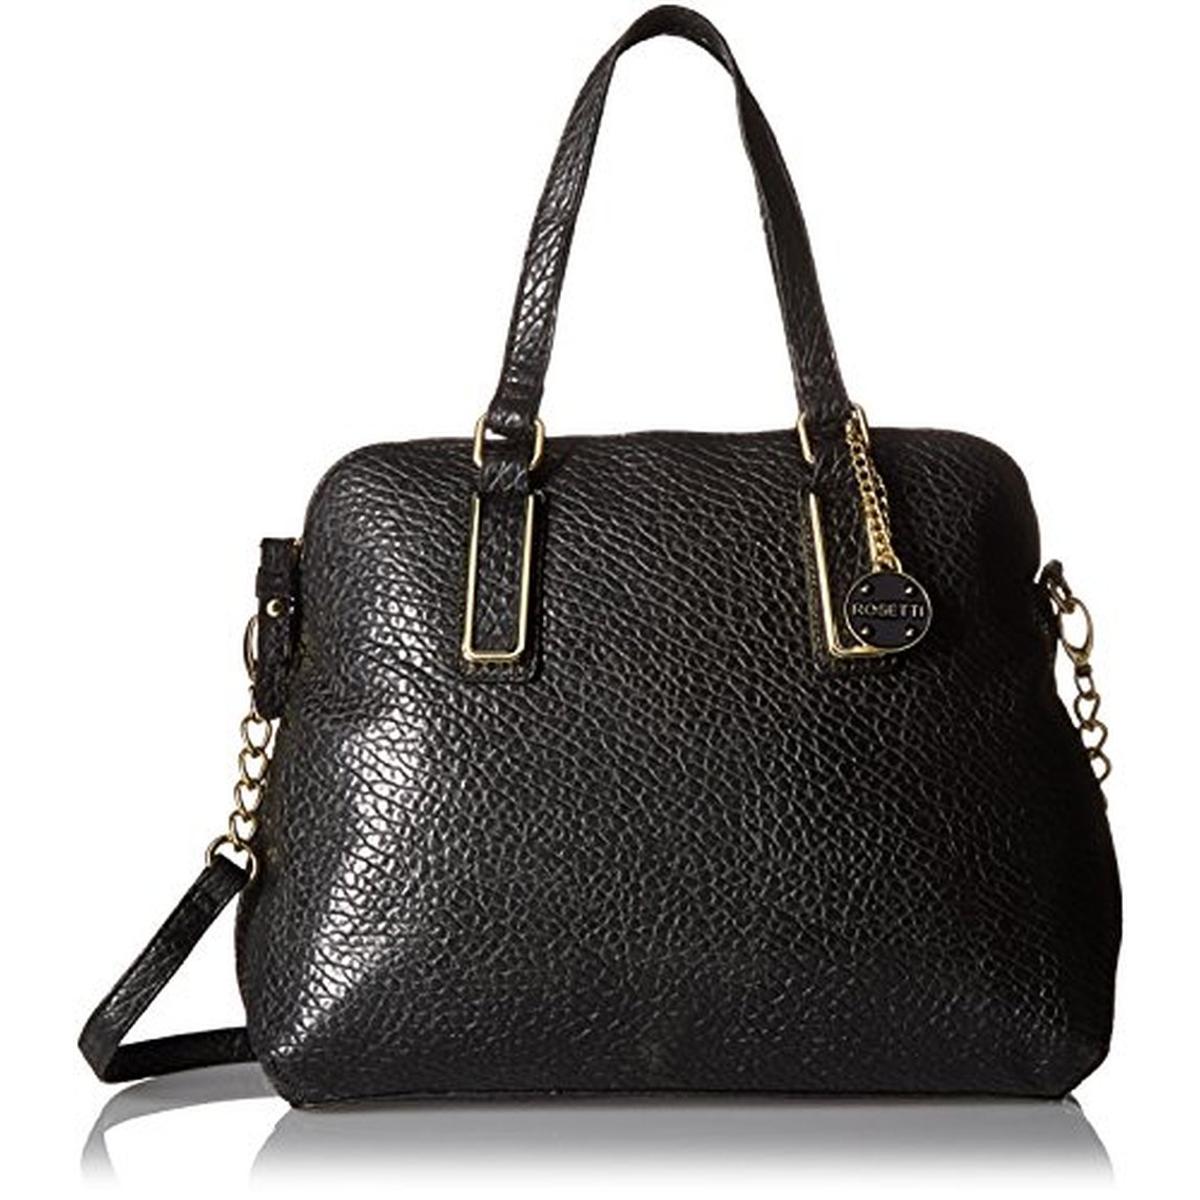 Rosetti 2869 Womens Polly Black Faux Leather Crossbody Handbag Purse Large Bhfo | eBay